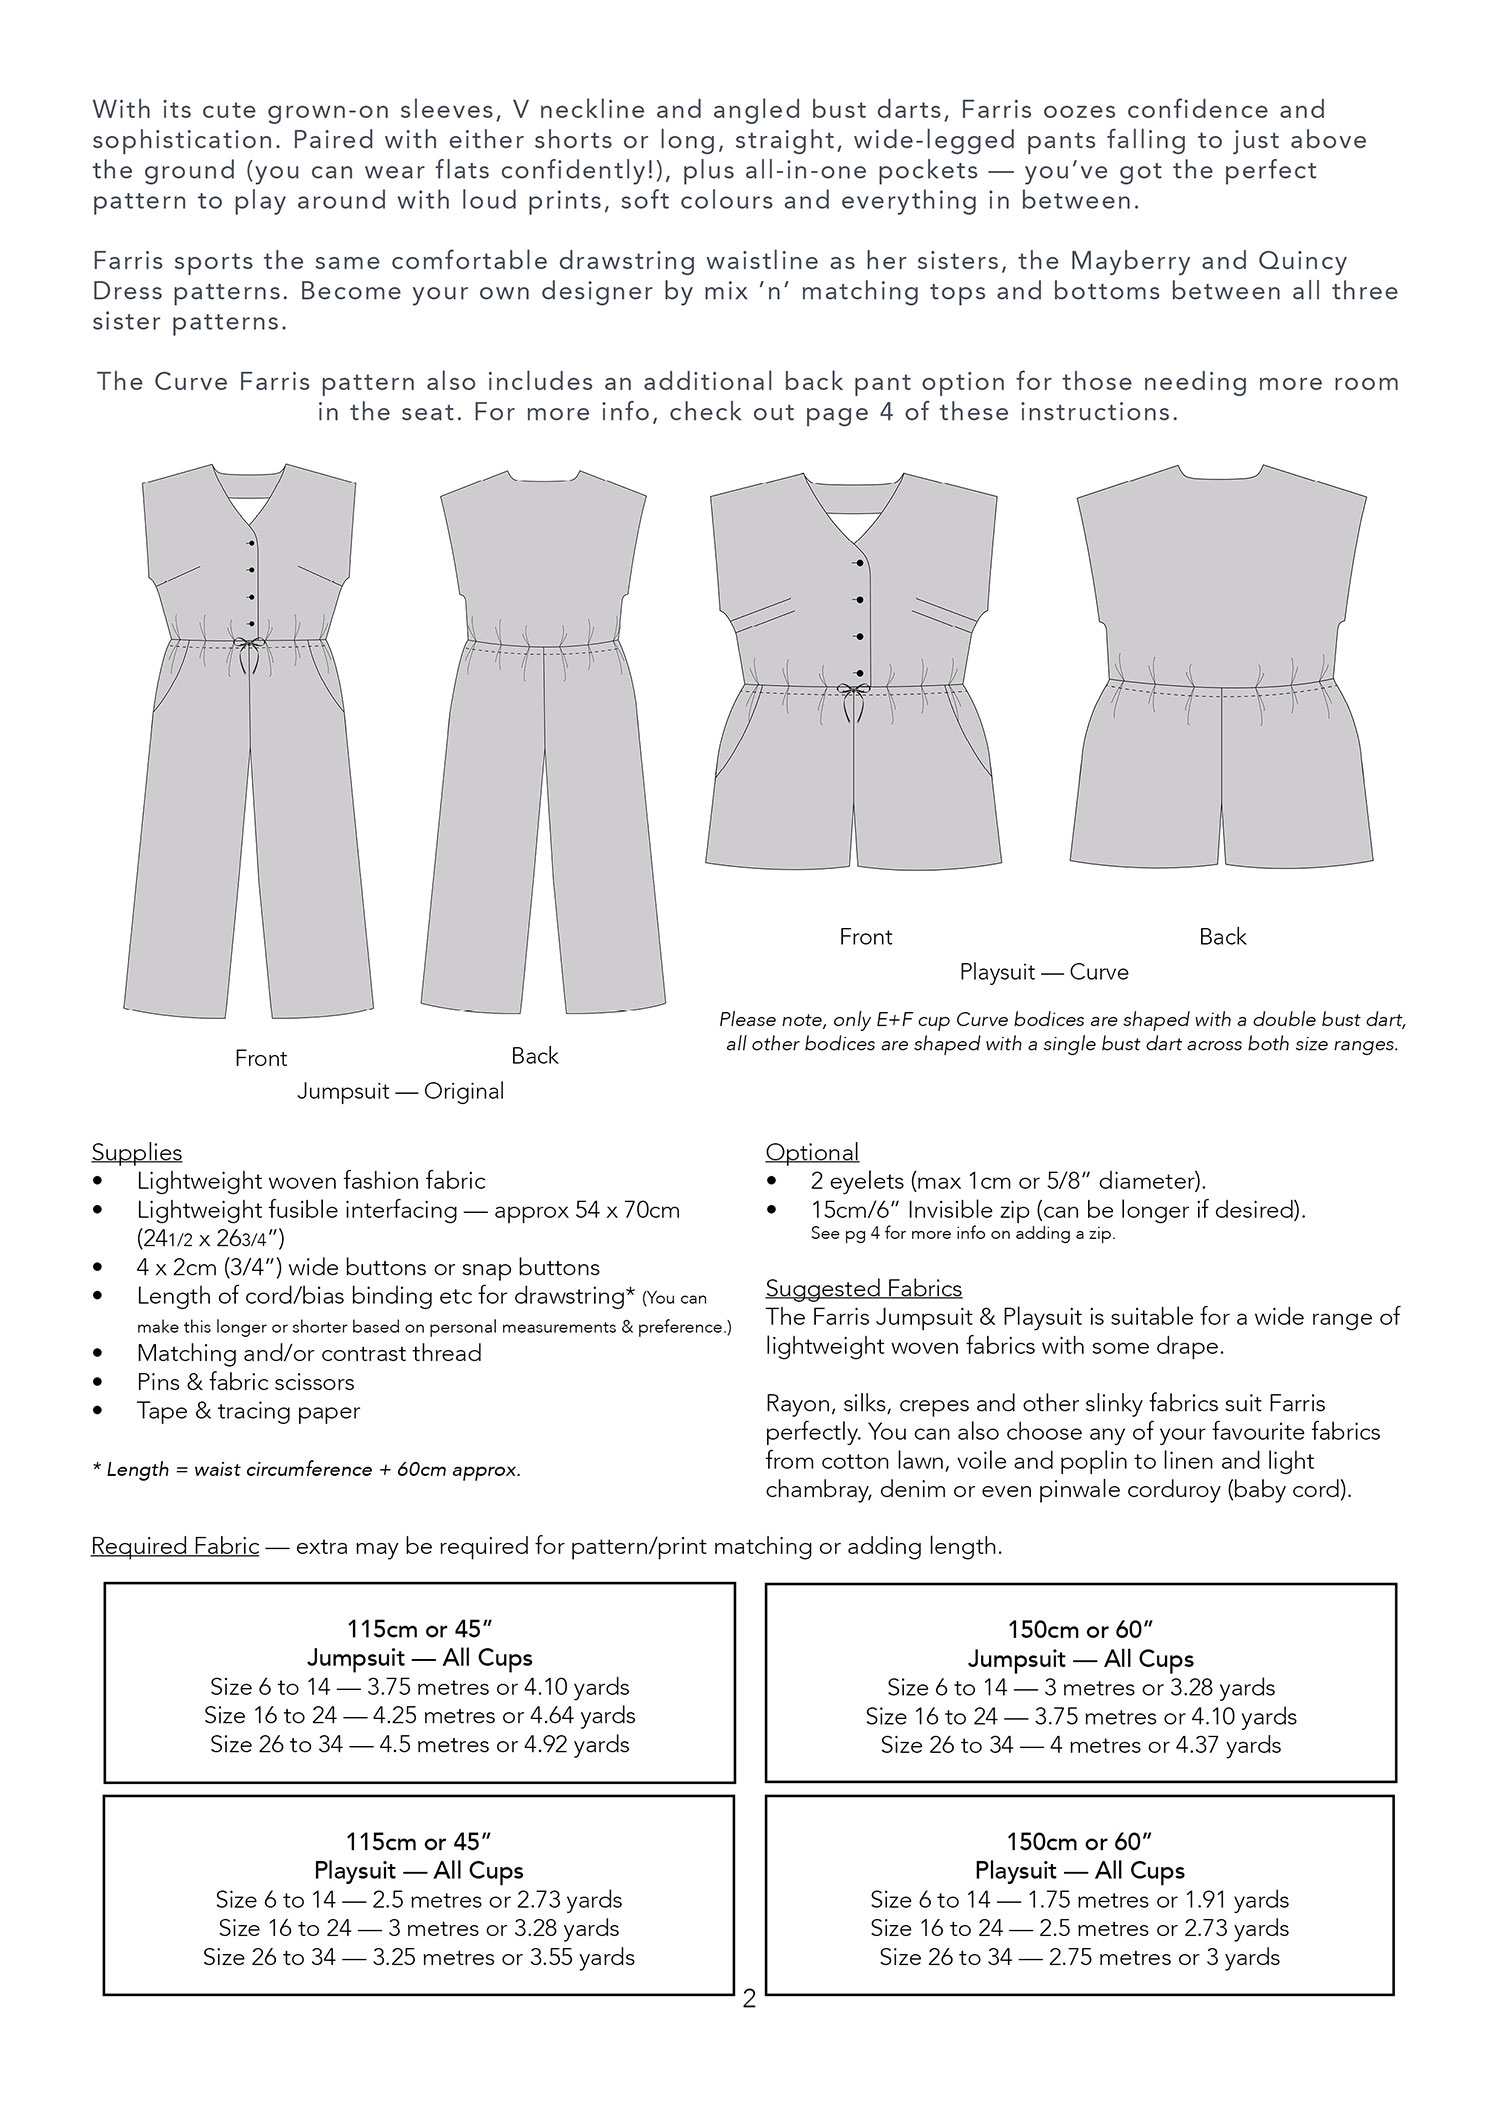 Fabric Requirements The Farris Jumpsuit Playsuit by Jennifer Lauren Handmade WEB 1